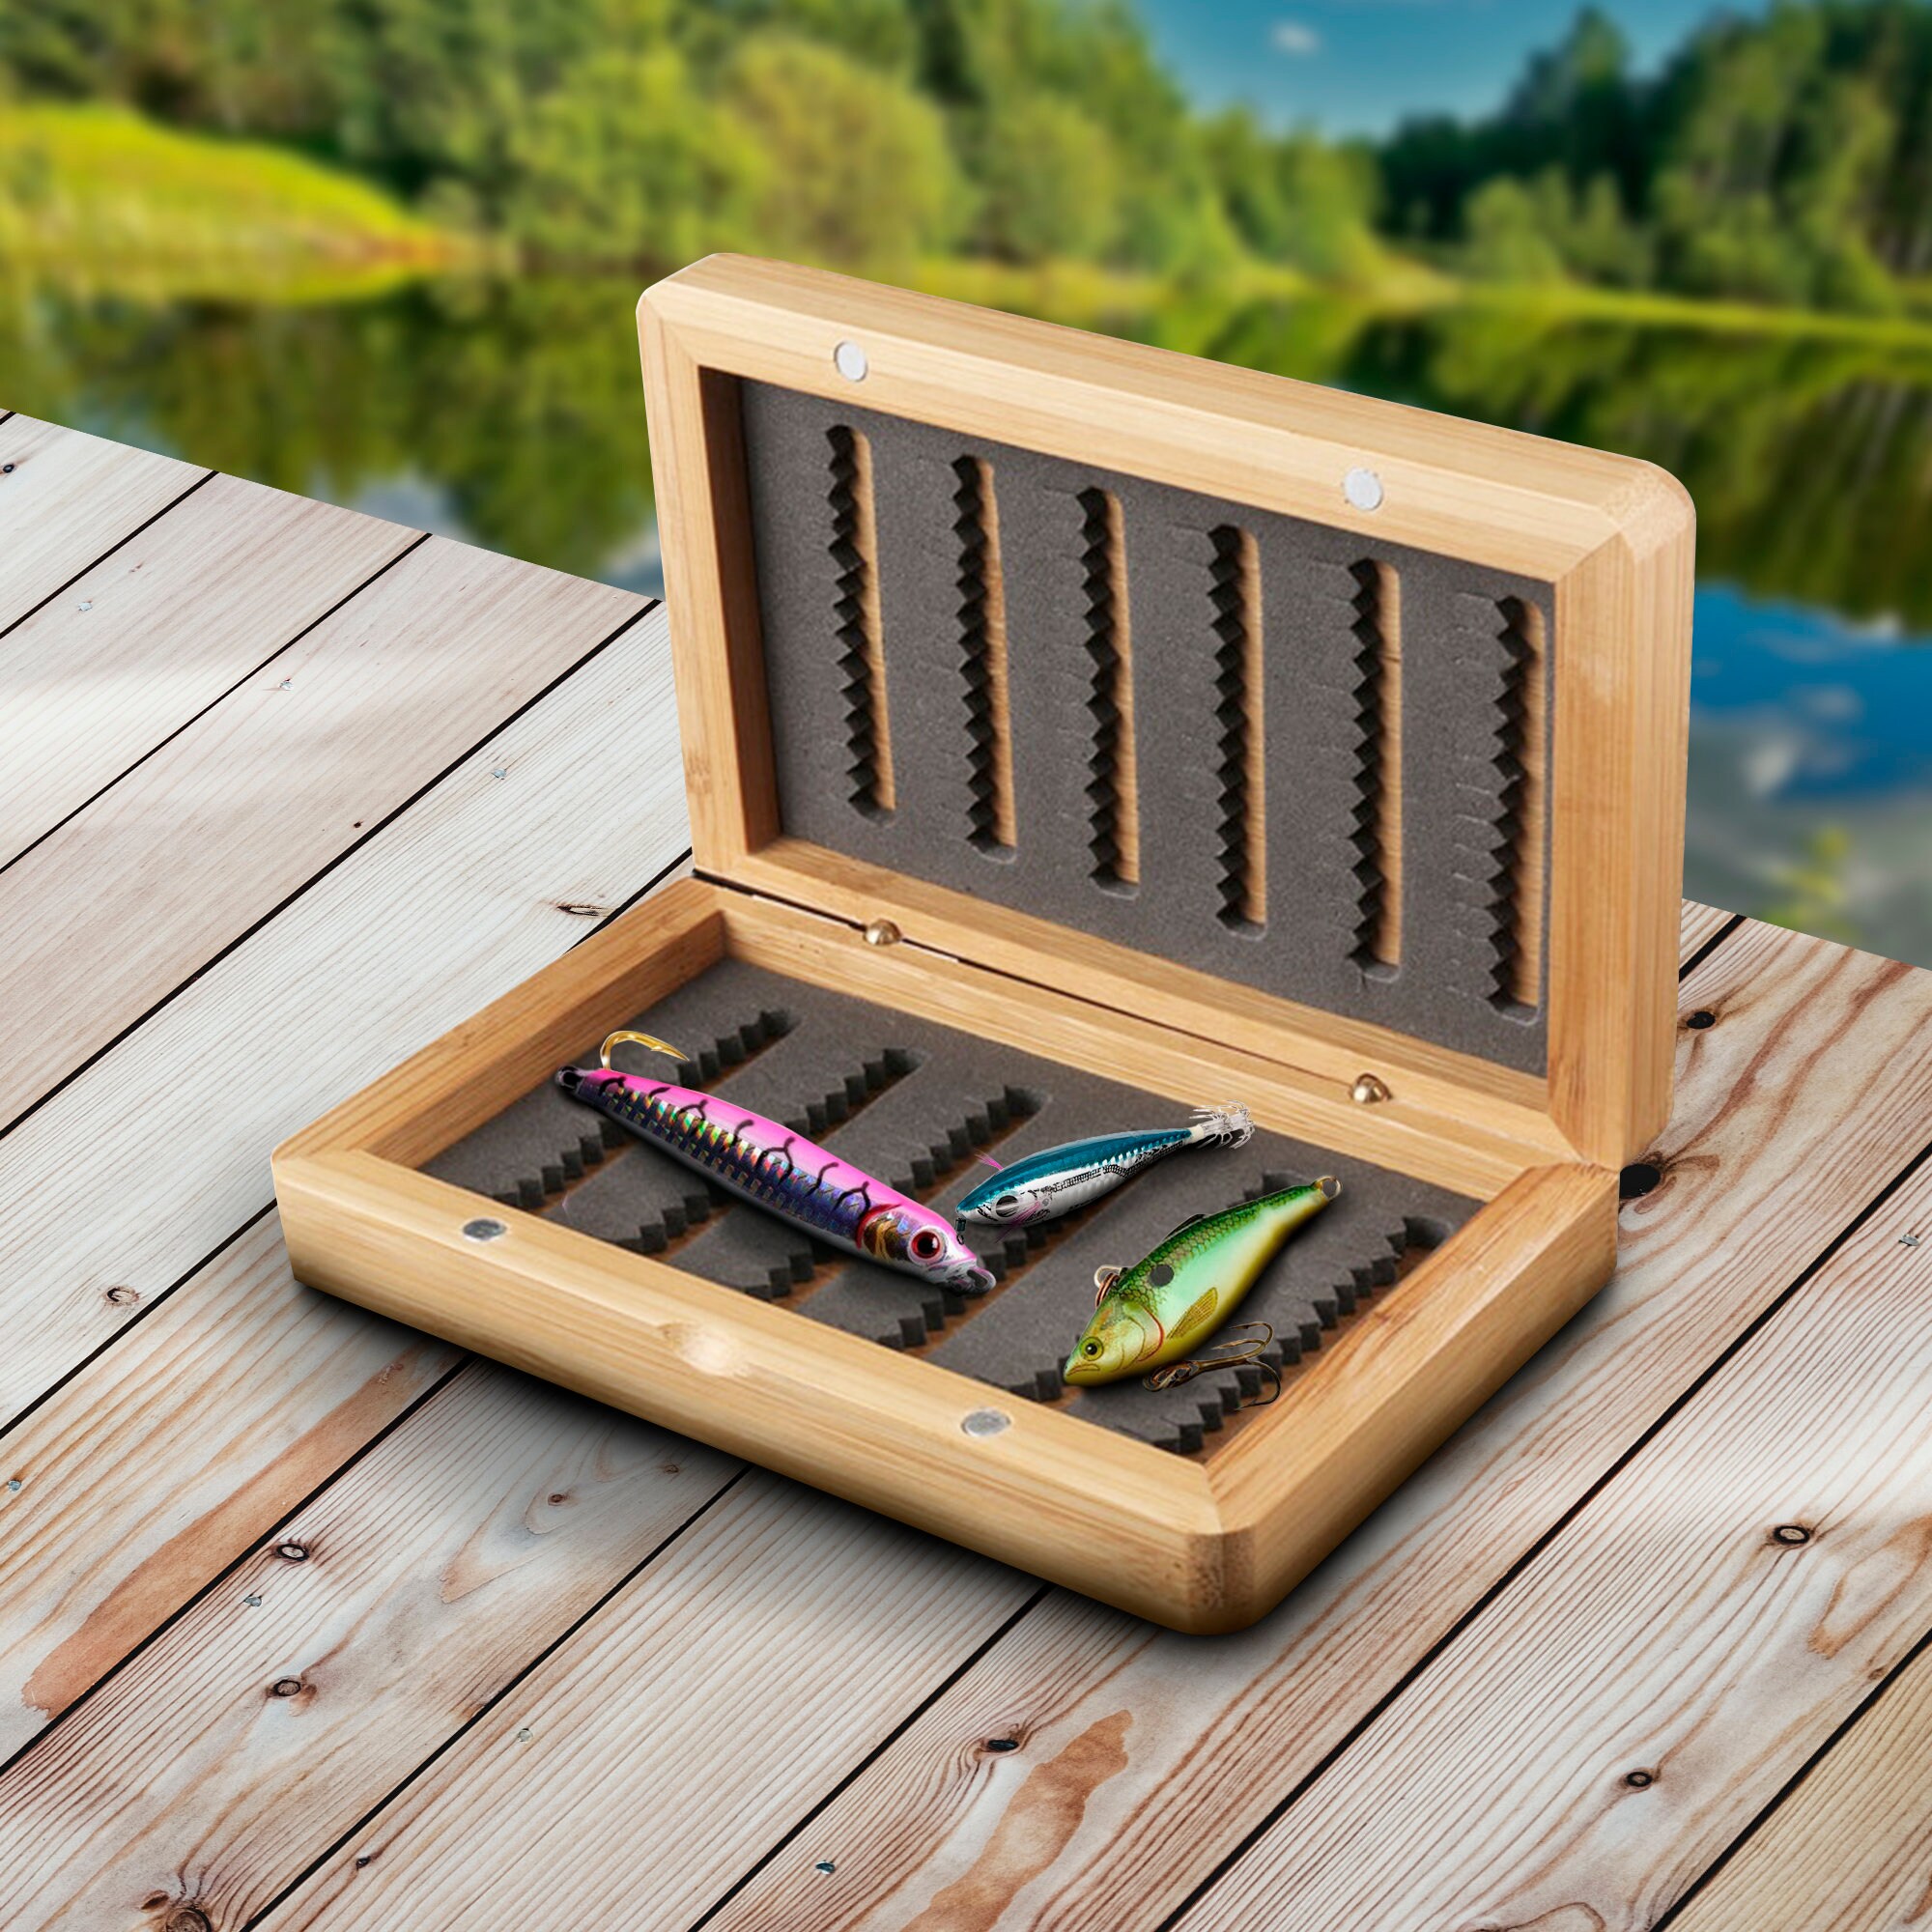 Fishing Memory Box, Engraved Fishing Box, Personalized Fishing Tackle Box,  Bamboo Fishing Tackle Box, Fisherman Retirement Gift 